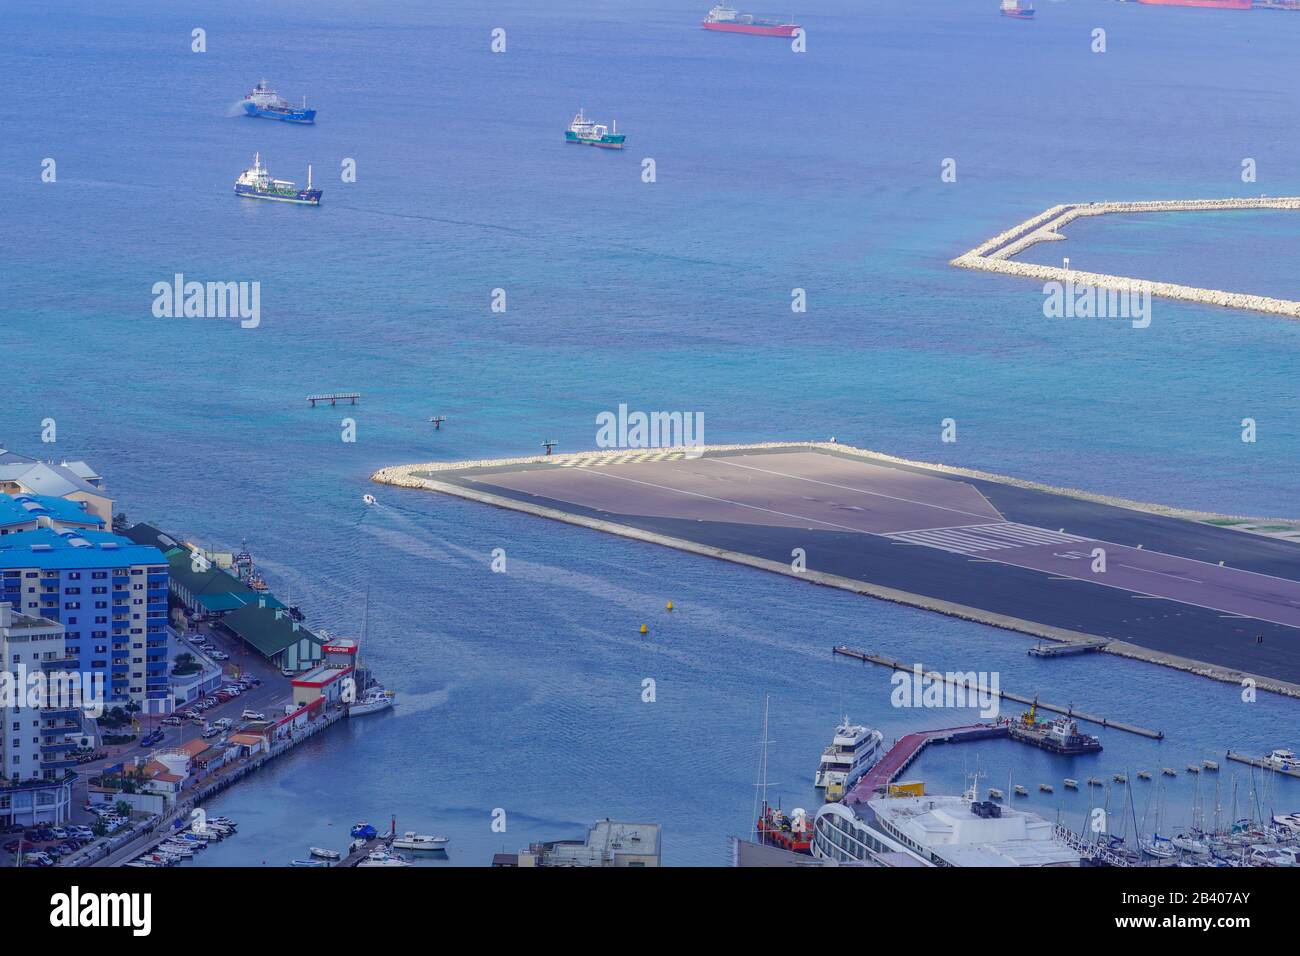 Gibraltar, UK - January 7, 2020: Runway for aircraft on the seashore Stock Photo